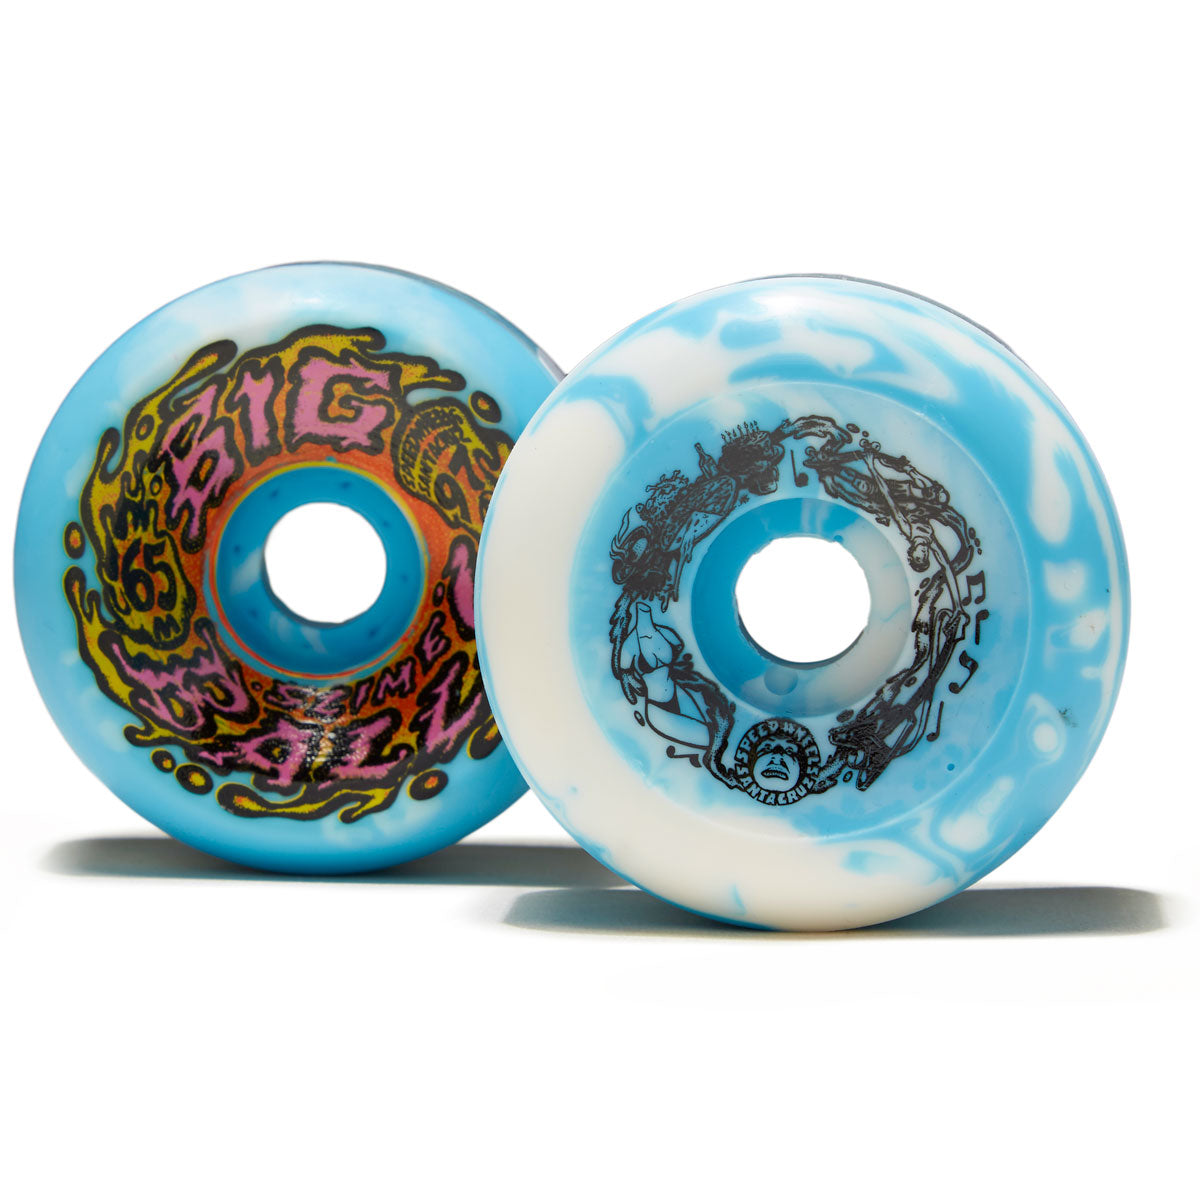 Slime Balls Big Balls 97a Skateboard Wheels - Blue/White Swirl - 65mm image 2